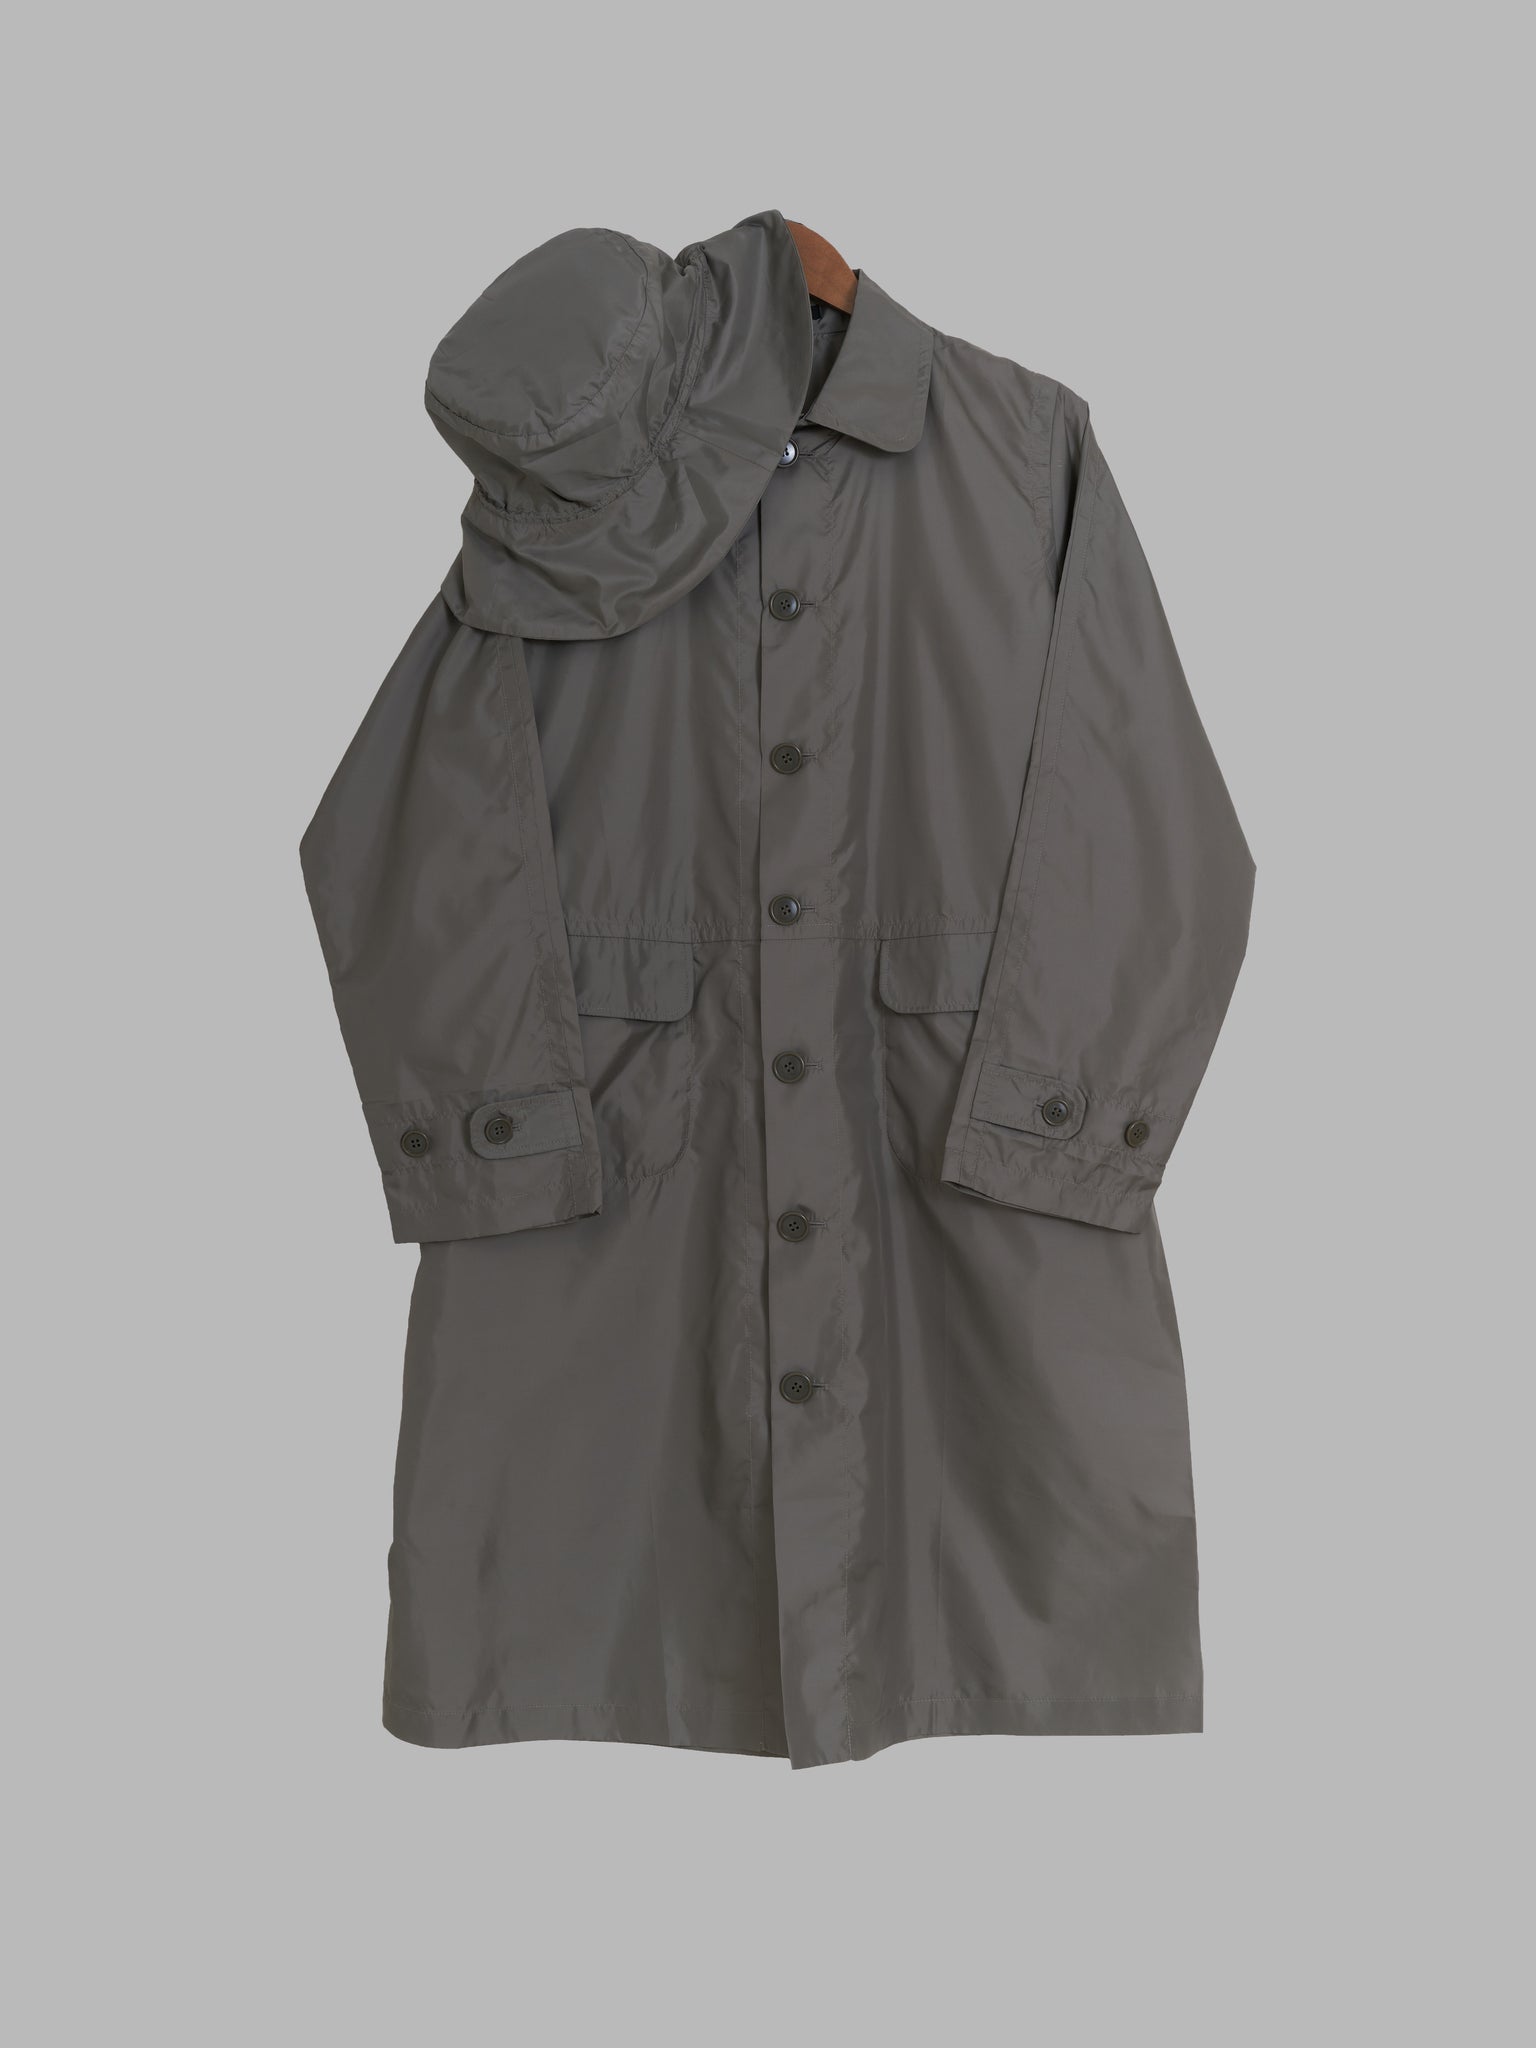 Yohji Yamamoto Y's For Living khaki raincoat with matching hat